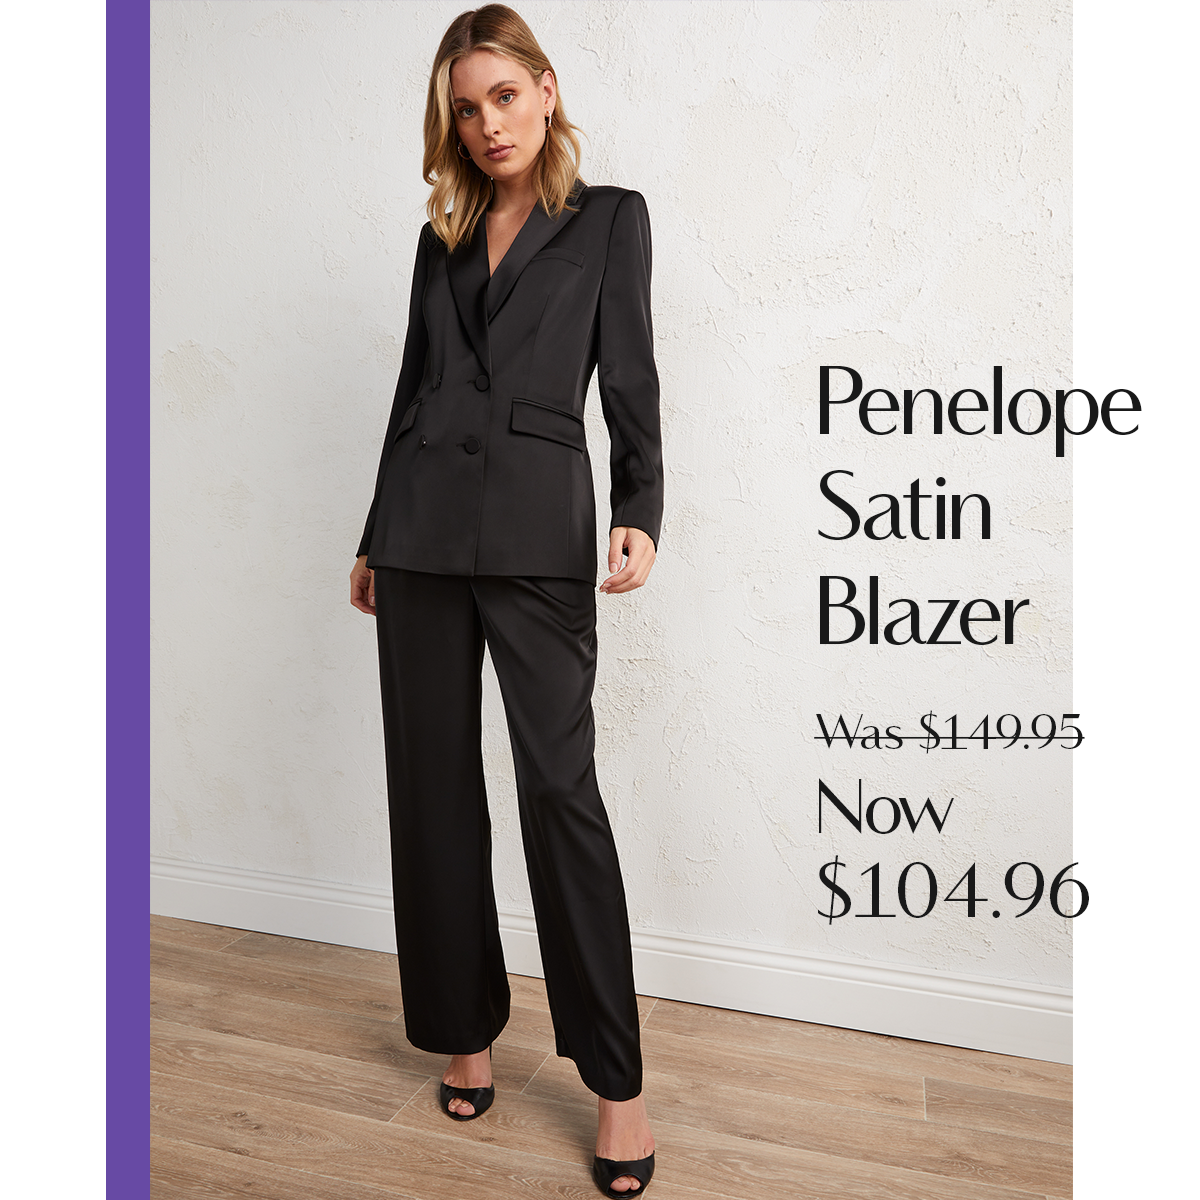 Penelope Satin Blazer Was $149.95 Now $104.96